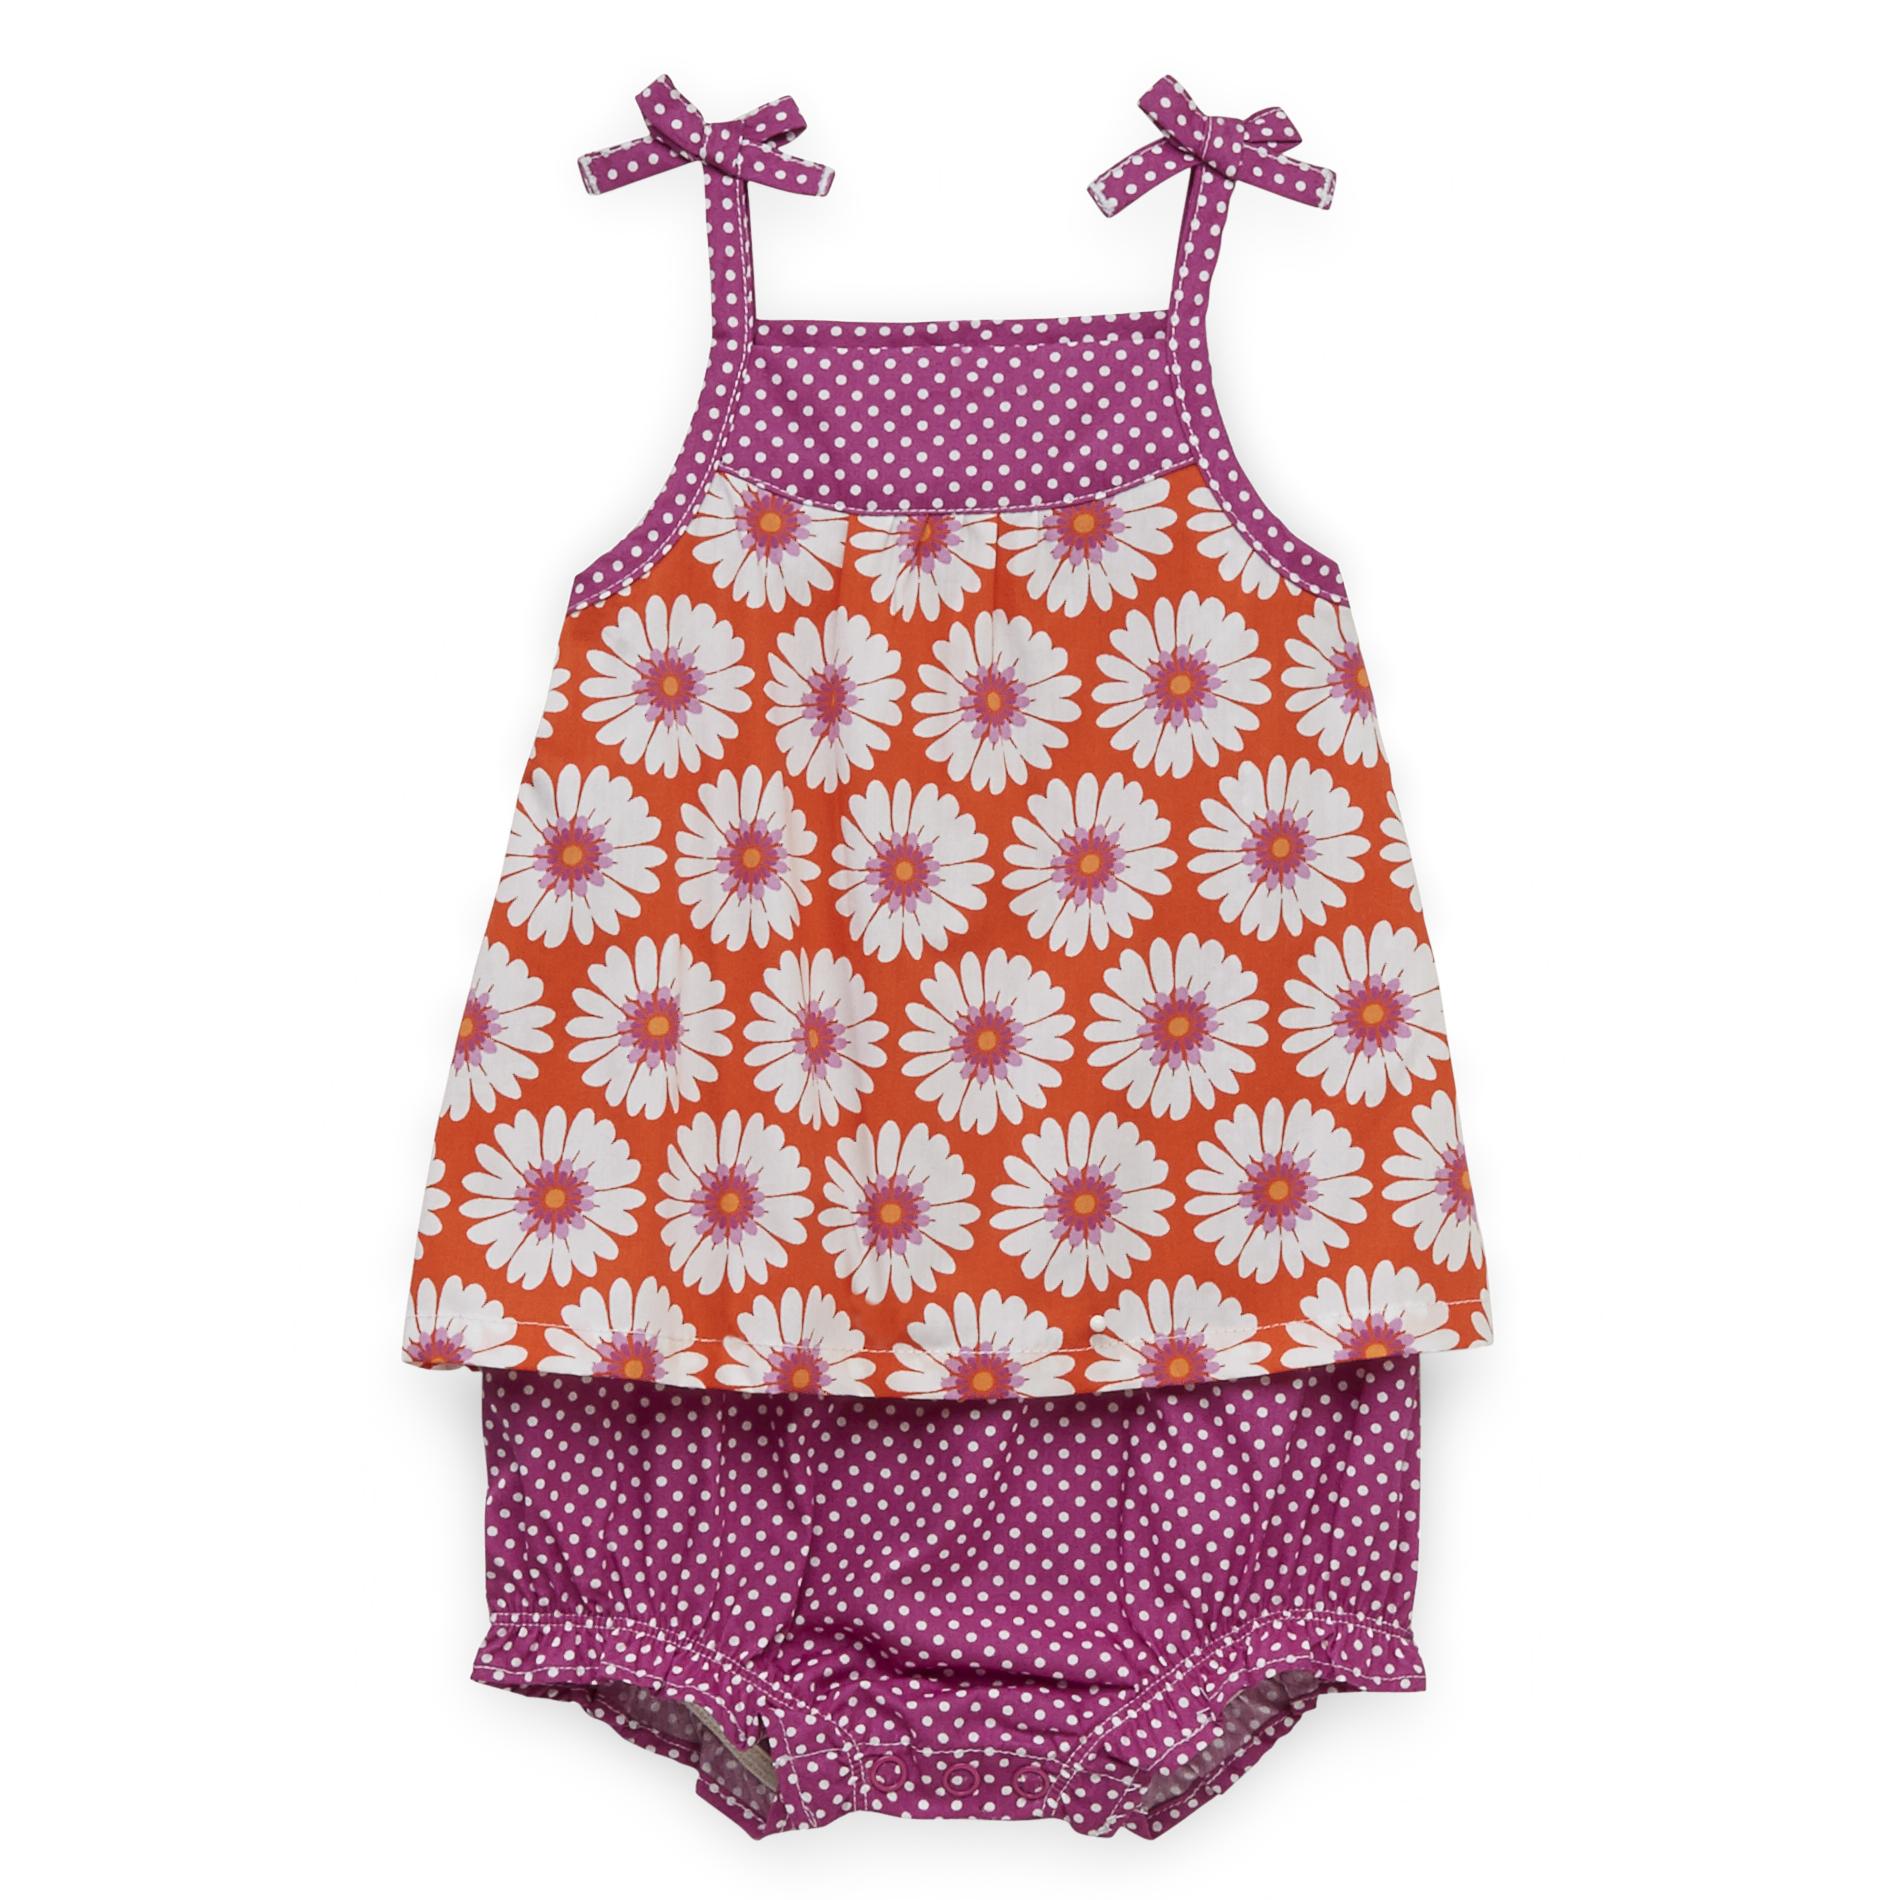 Small Wonders Newborn Girl's Bodysuit - Floral & Polka Dots